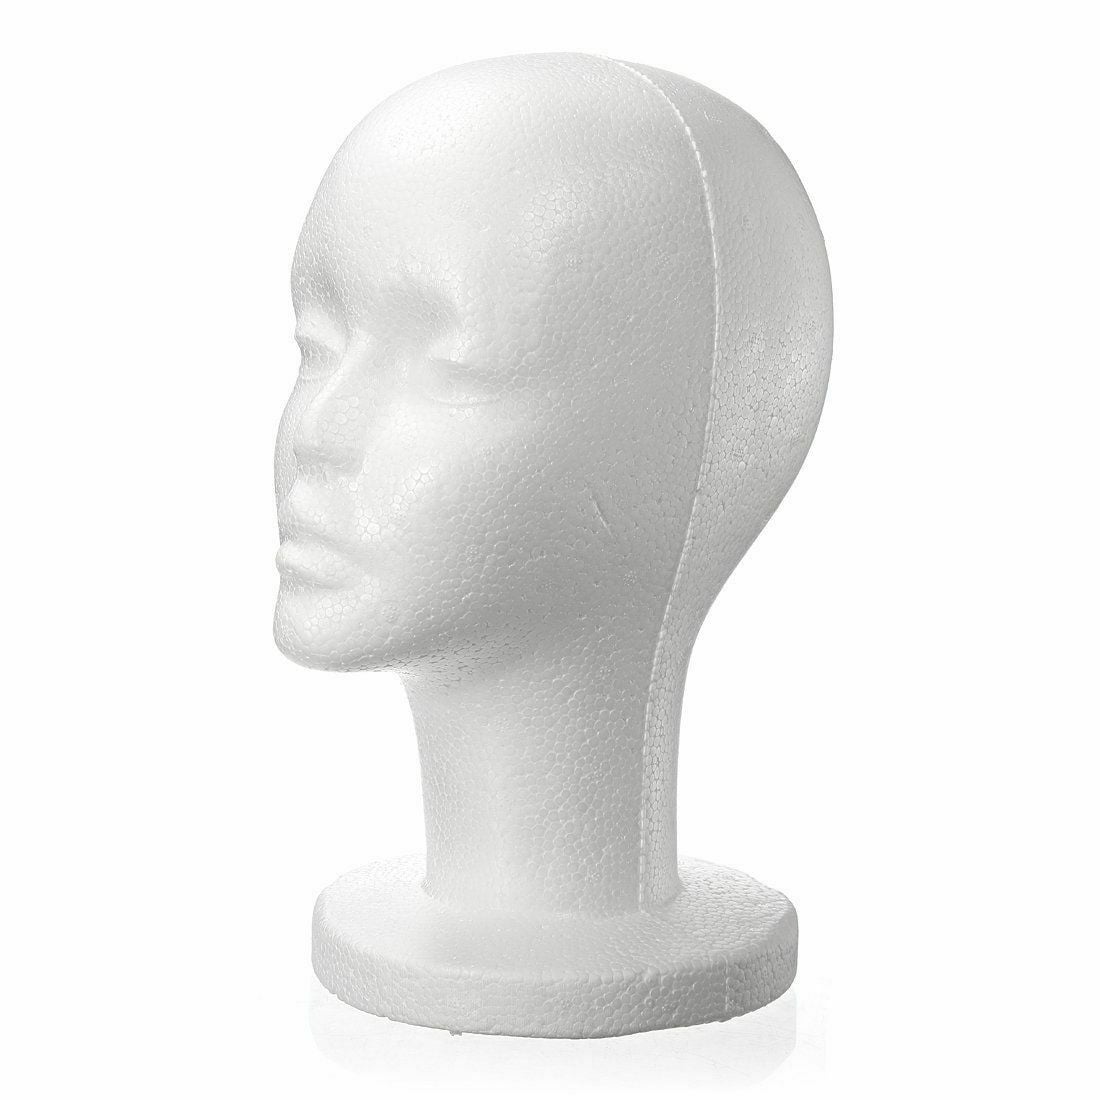 Female Head Model Wig hair Hat Display Styrofoam Foam Mannequin Manikin Striking 